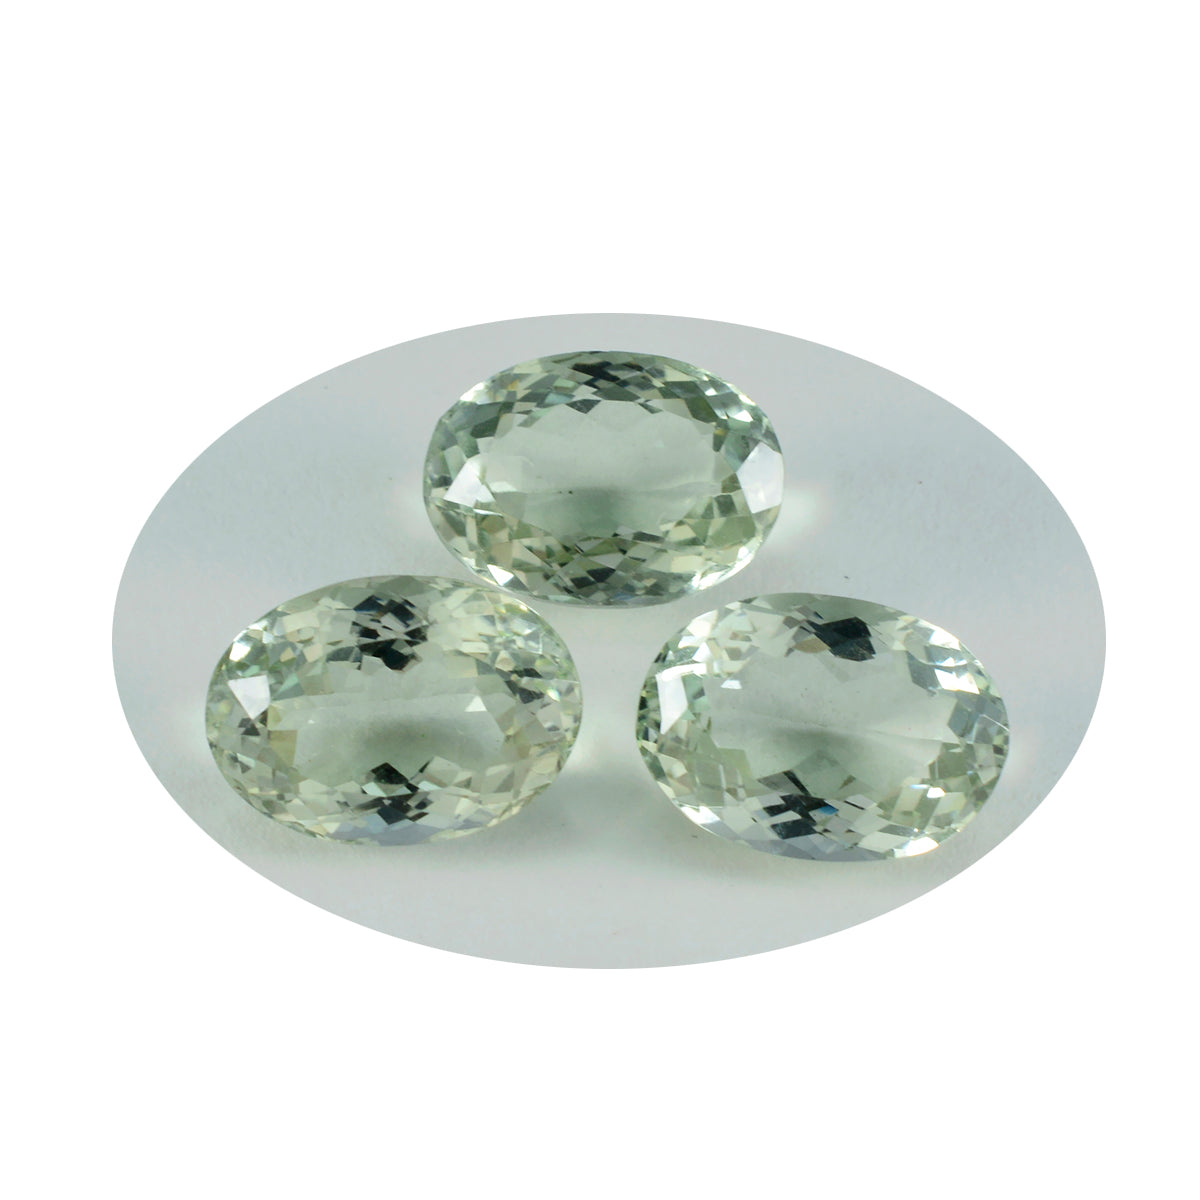 Riyogems 1 Stück grüner Amethyst, facettiert, 10 x 12 mm, ovale Form, süßer Qualitäts-Edelstein